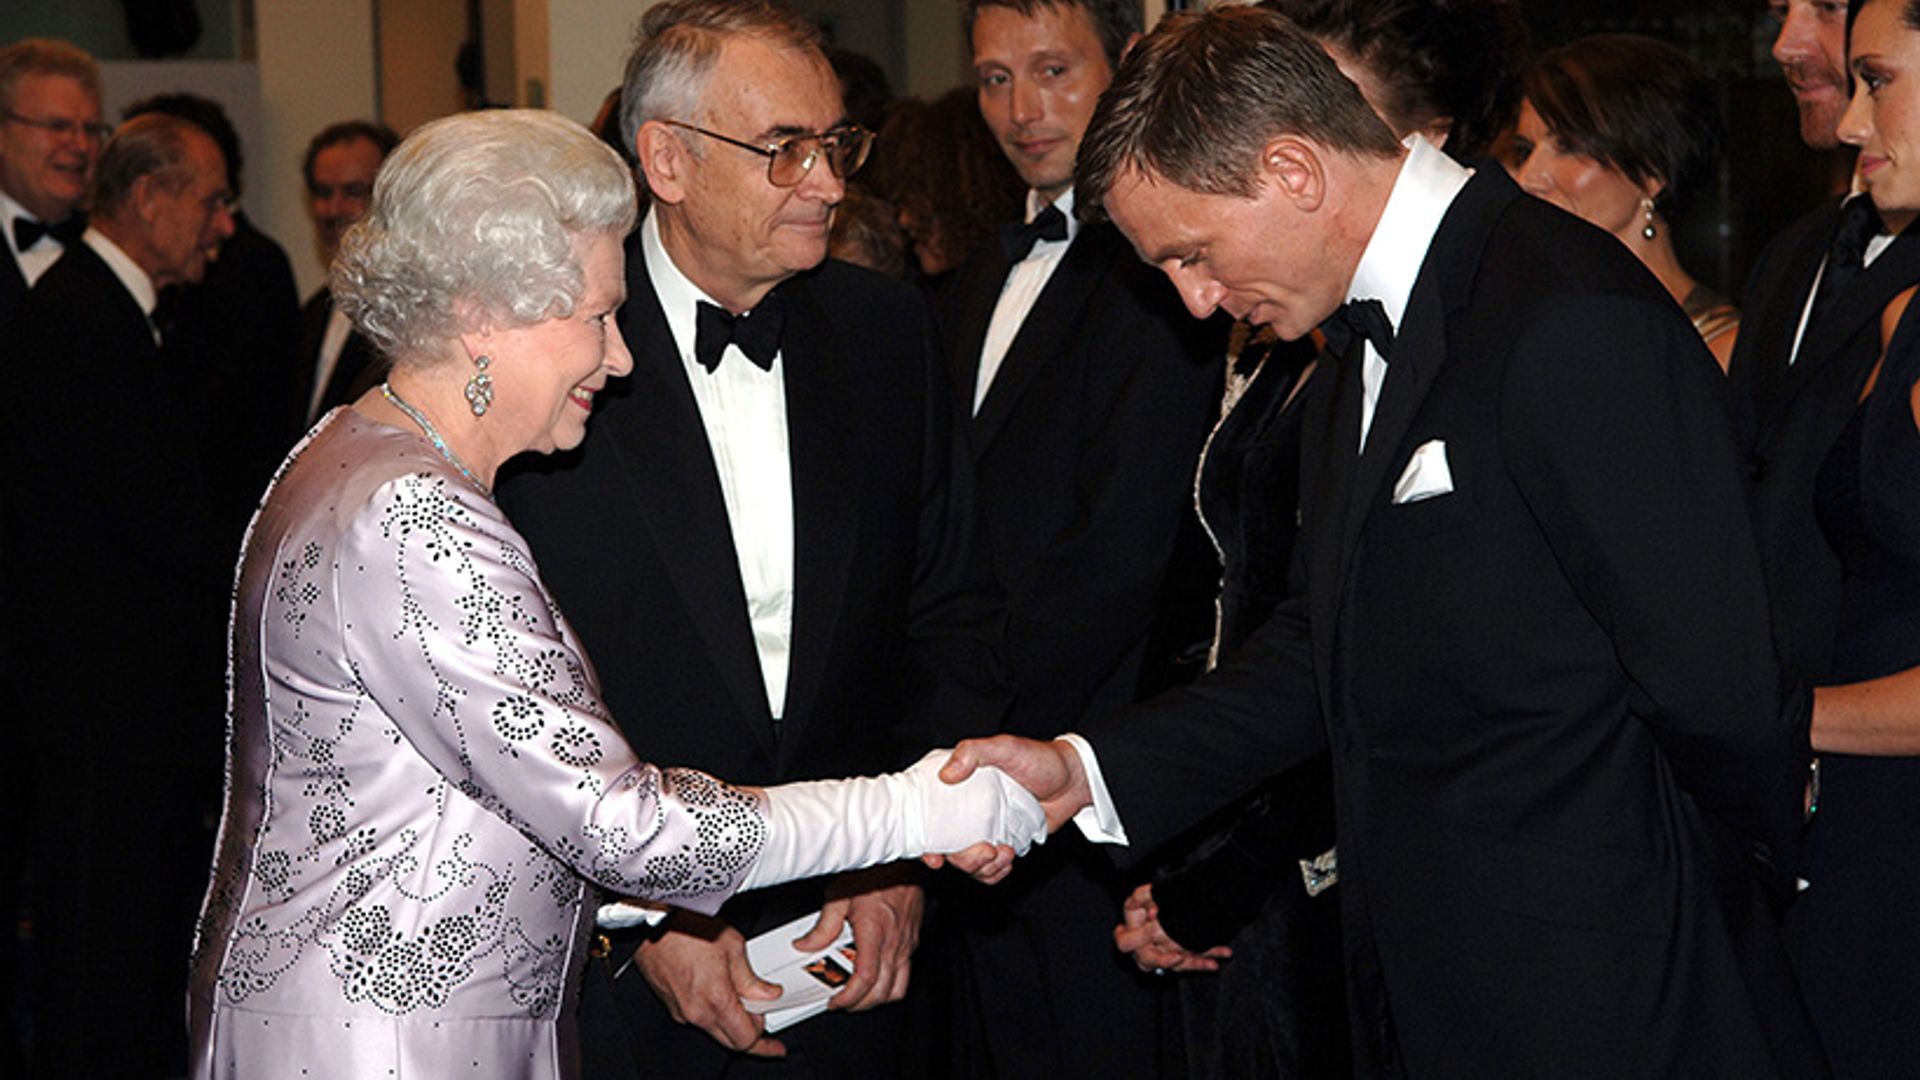 The Queen shaking Daniel Craig's hand